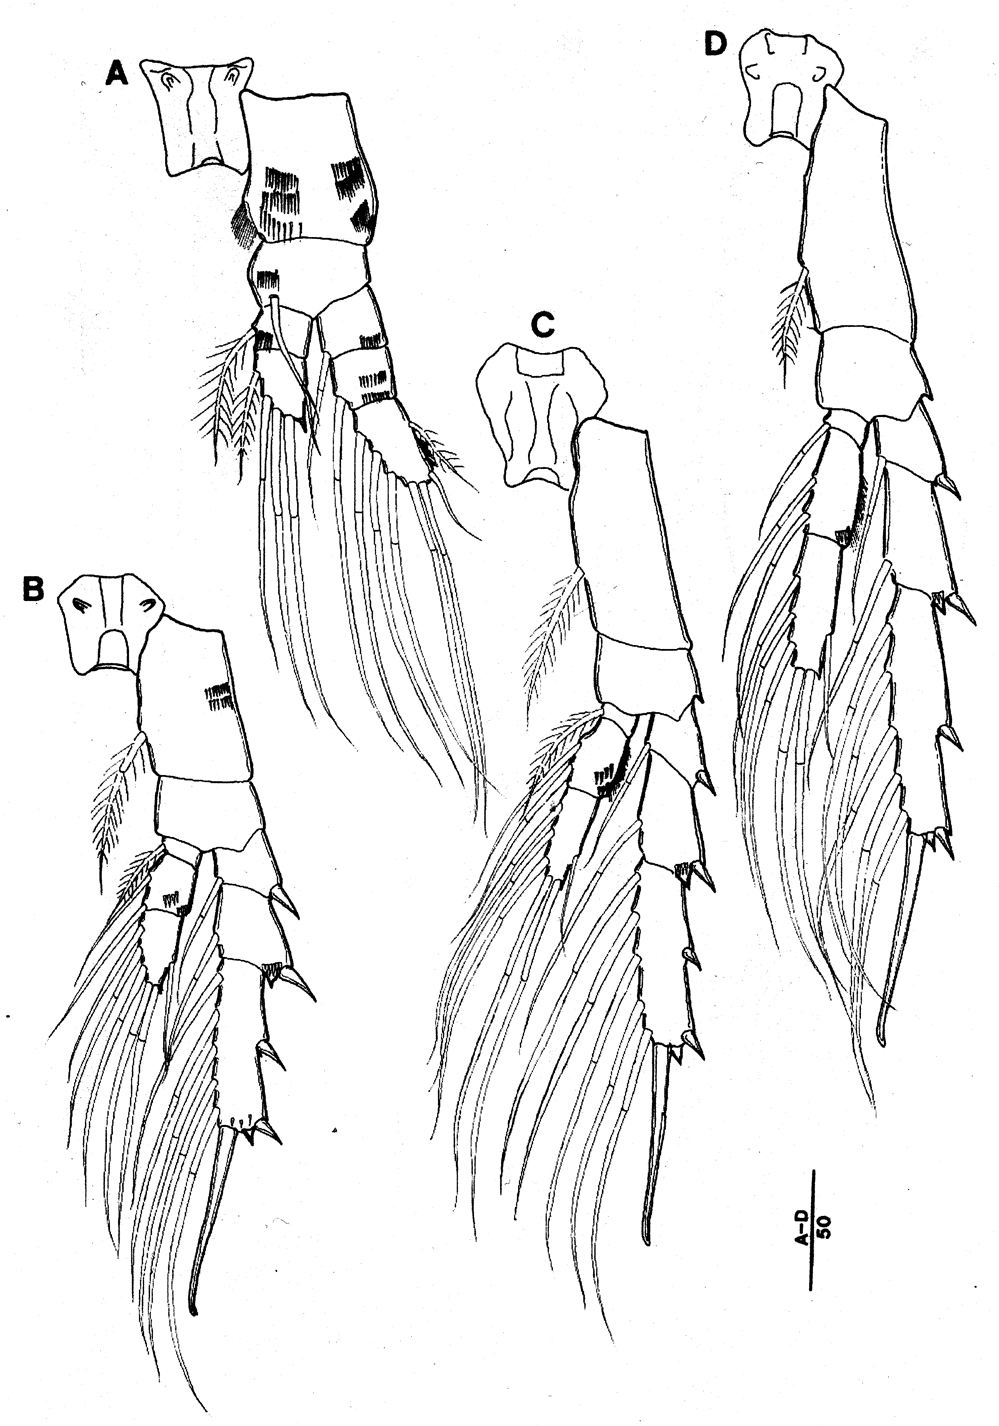 Species Bestiolina coreana - Plate 3 of morphological figures